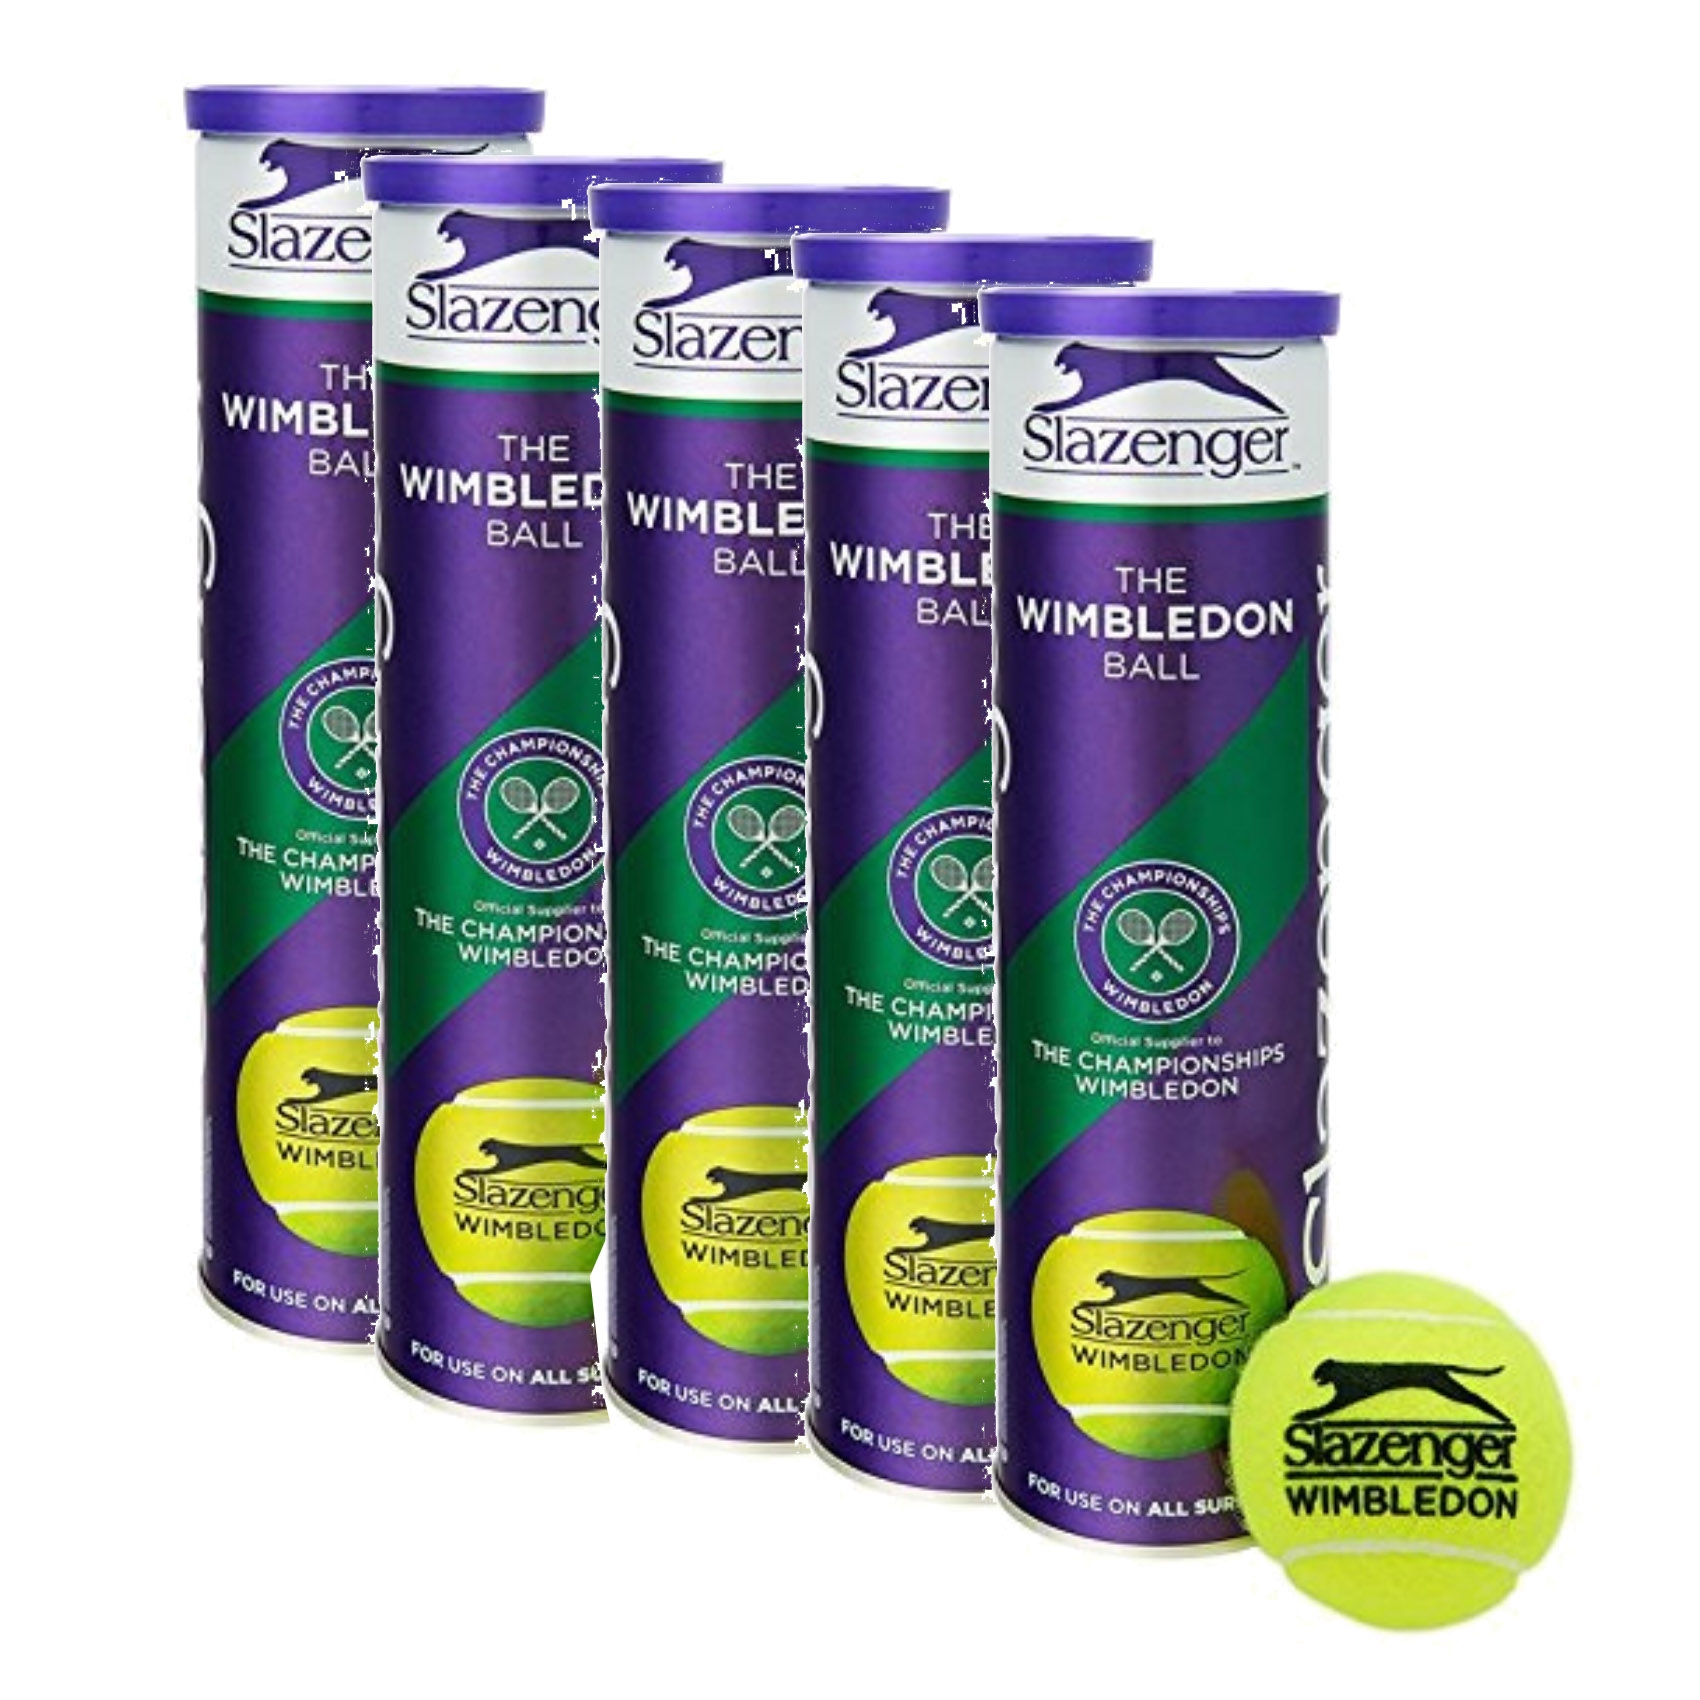 4 balls per can Pack of 3 cans per order; All surfaces Slazenger Tennis Balls 